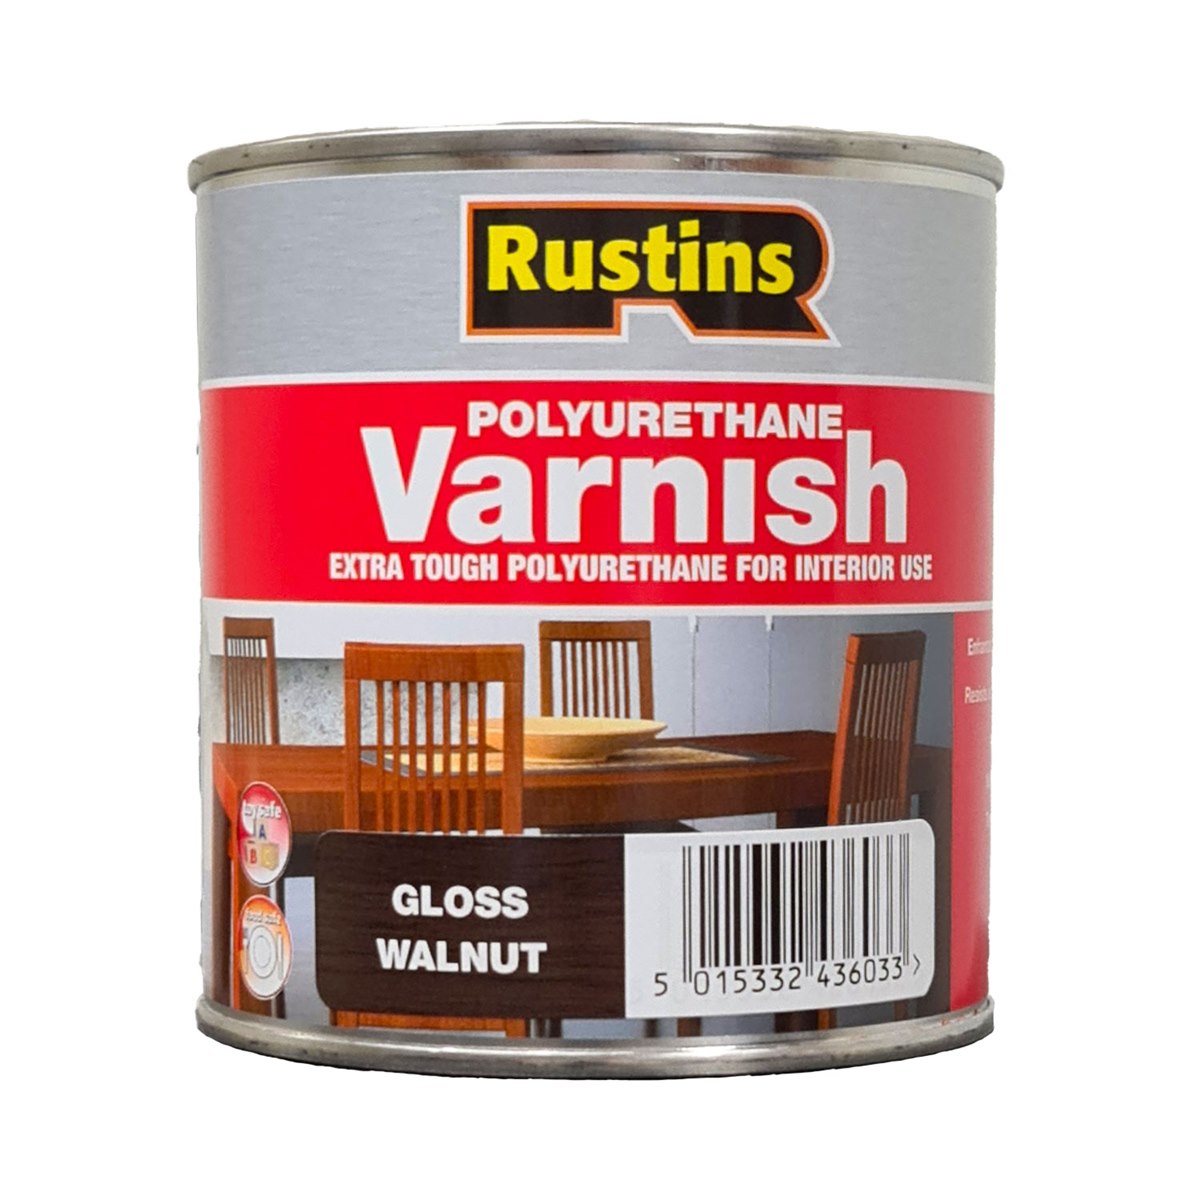 Rustins Polyurethane Varnish Gloss Walnut 500ml